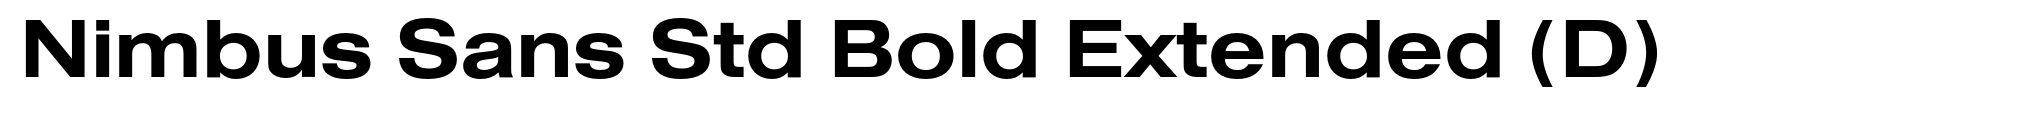 Nimbus Sans Std Bold Extended (D) image